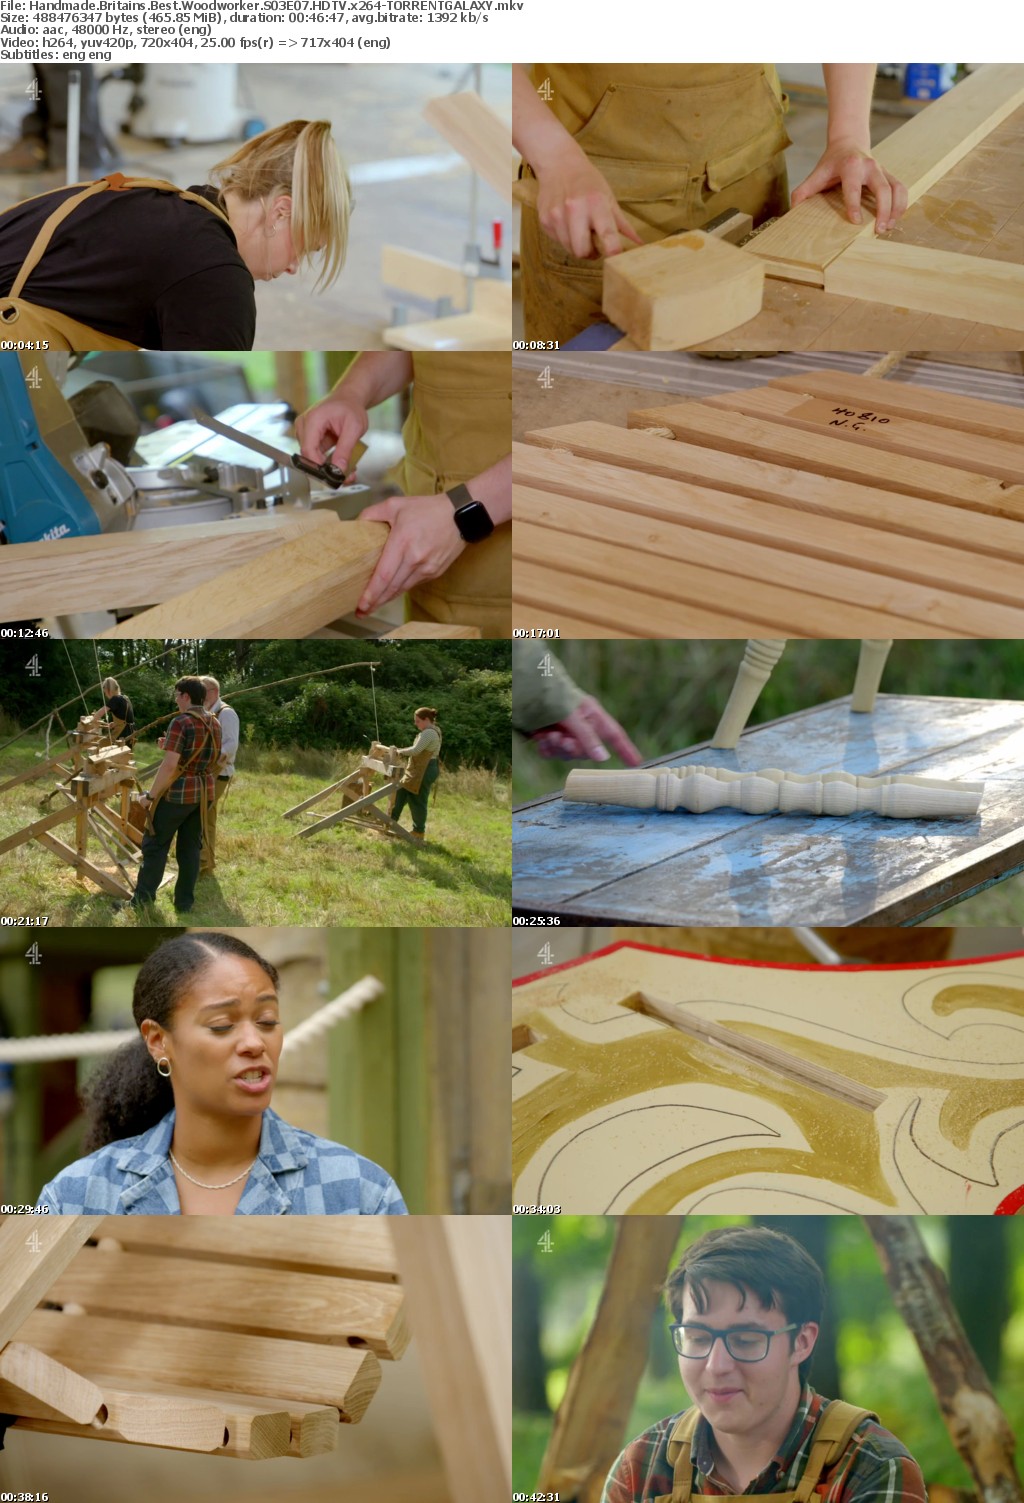 Handmade Britains Best Woodworker S03E07 HDTV x264-GALAXY